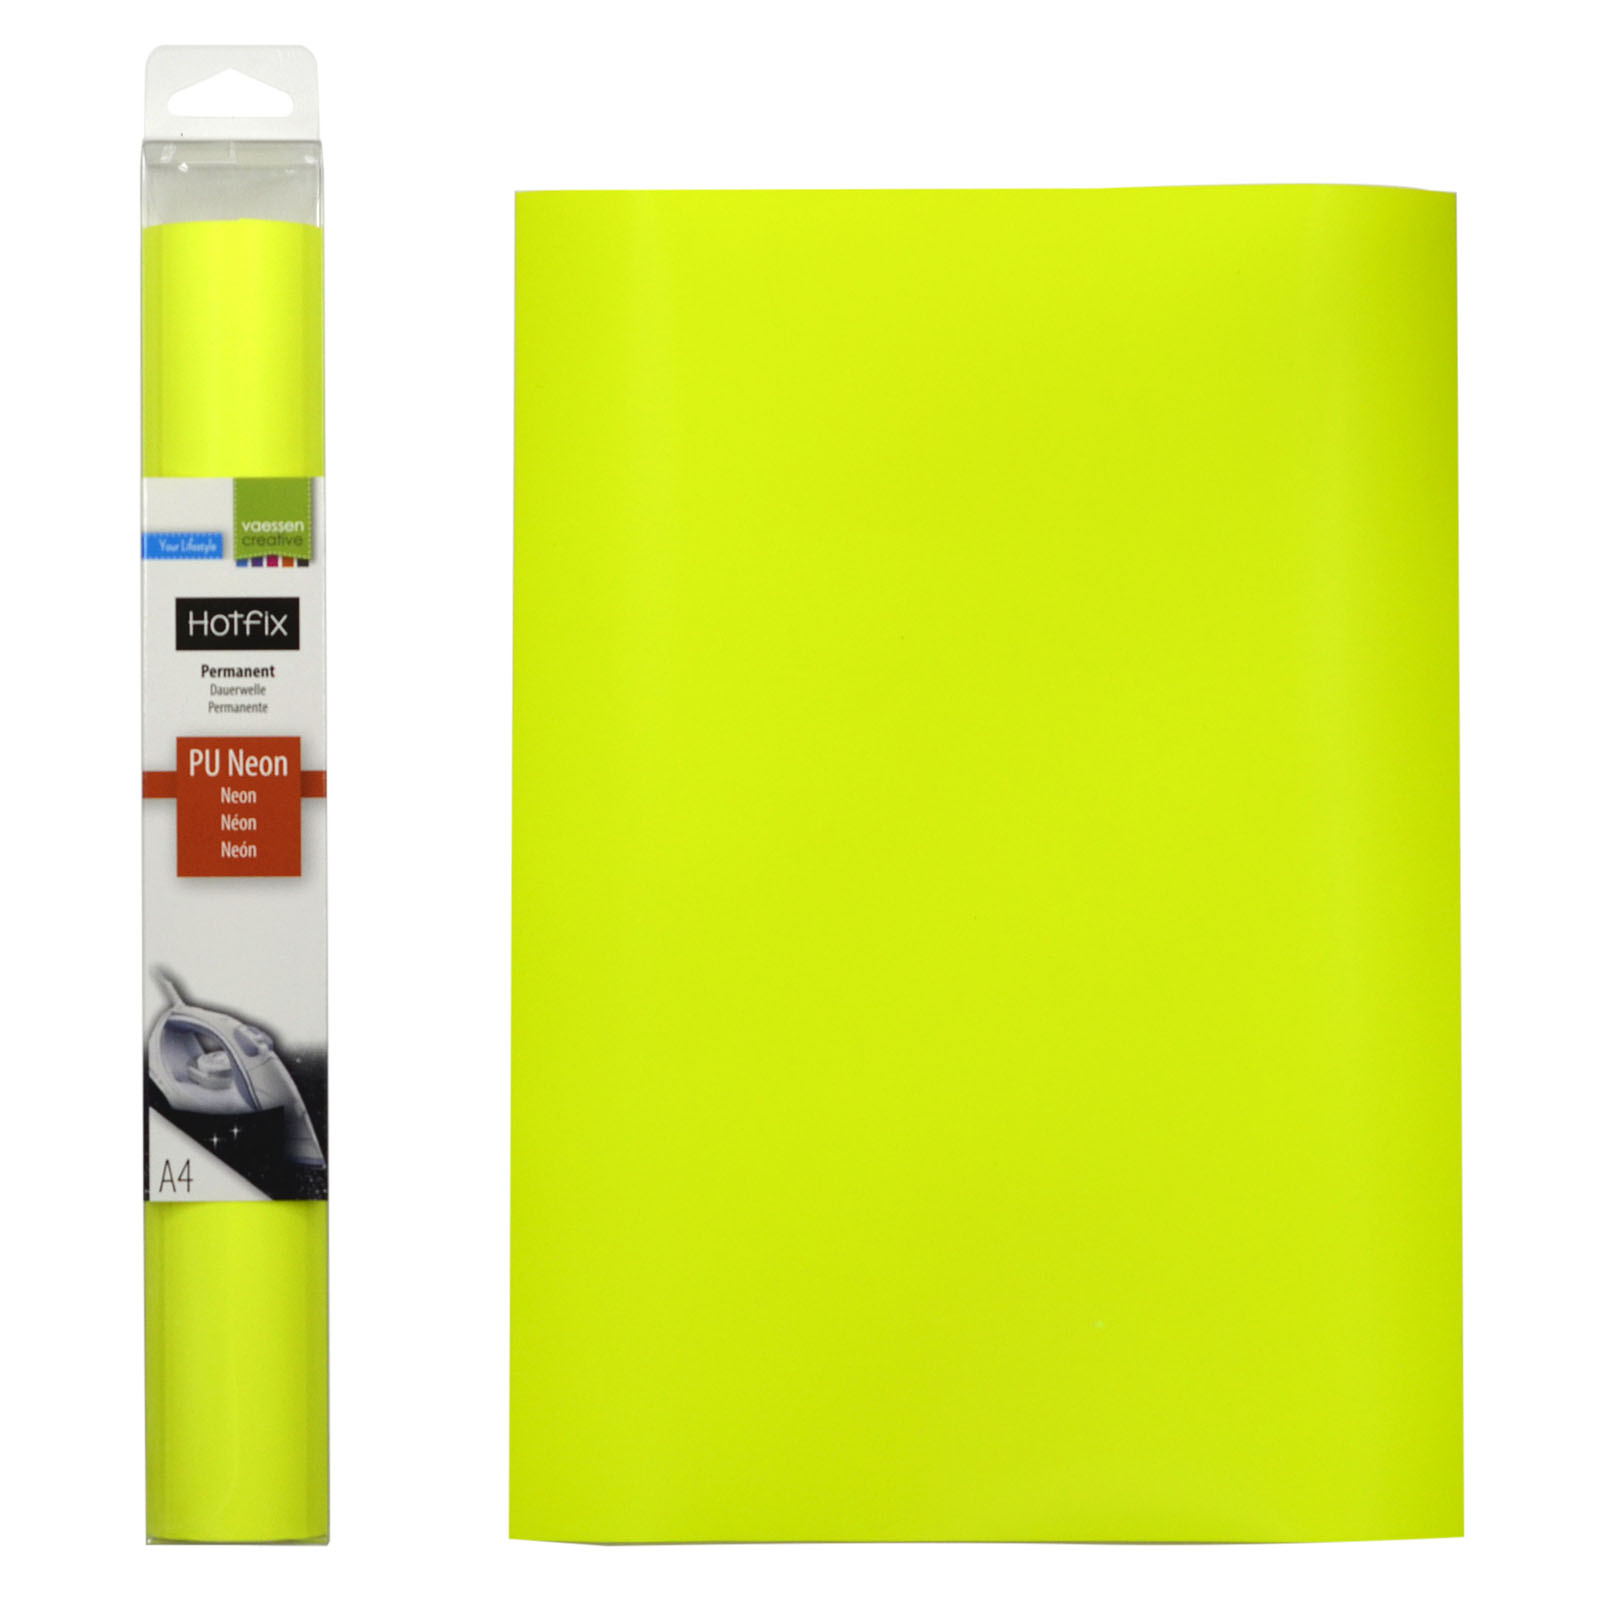 Vaessen Creative • Flexfoil PU Neon A4 Yellow